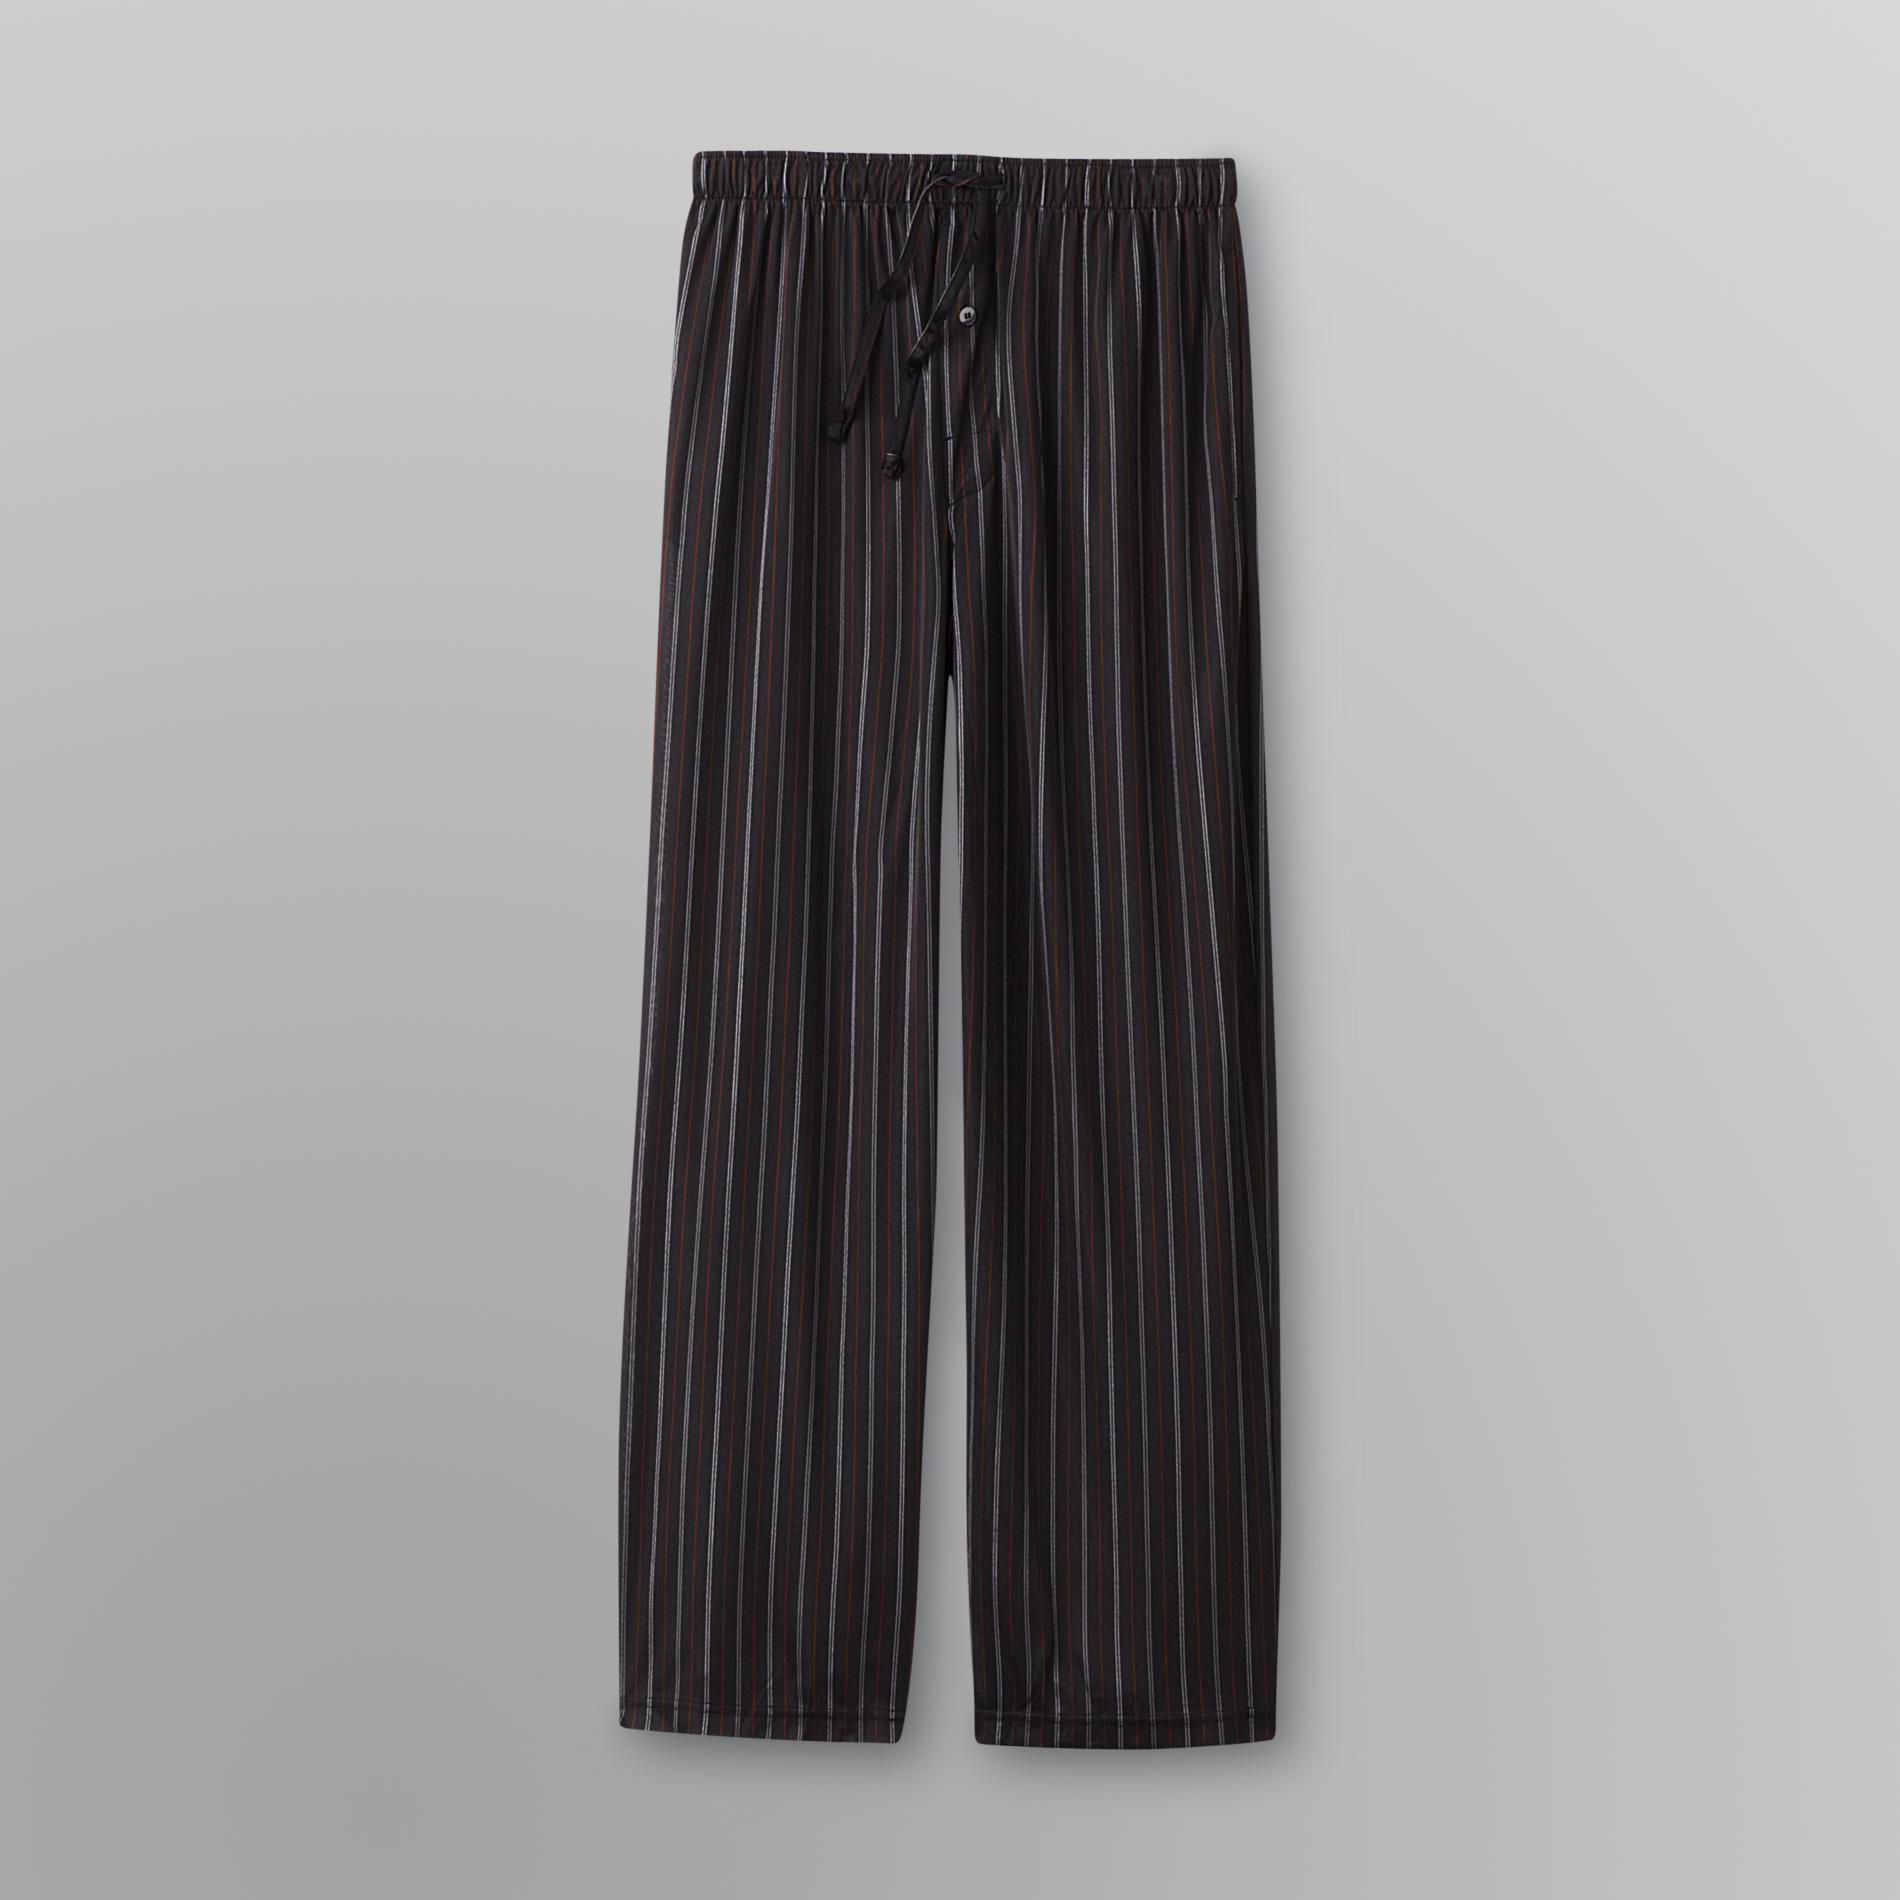 Basic Editions Men's Satin Pajama Pants - Striped